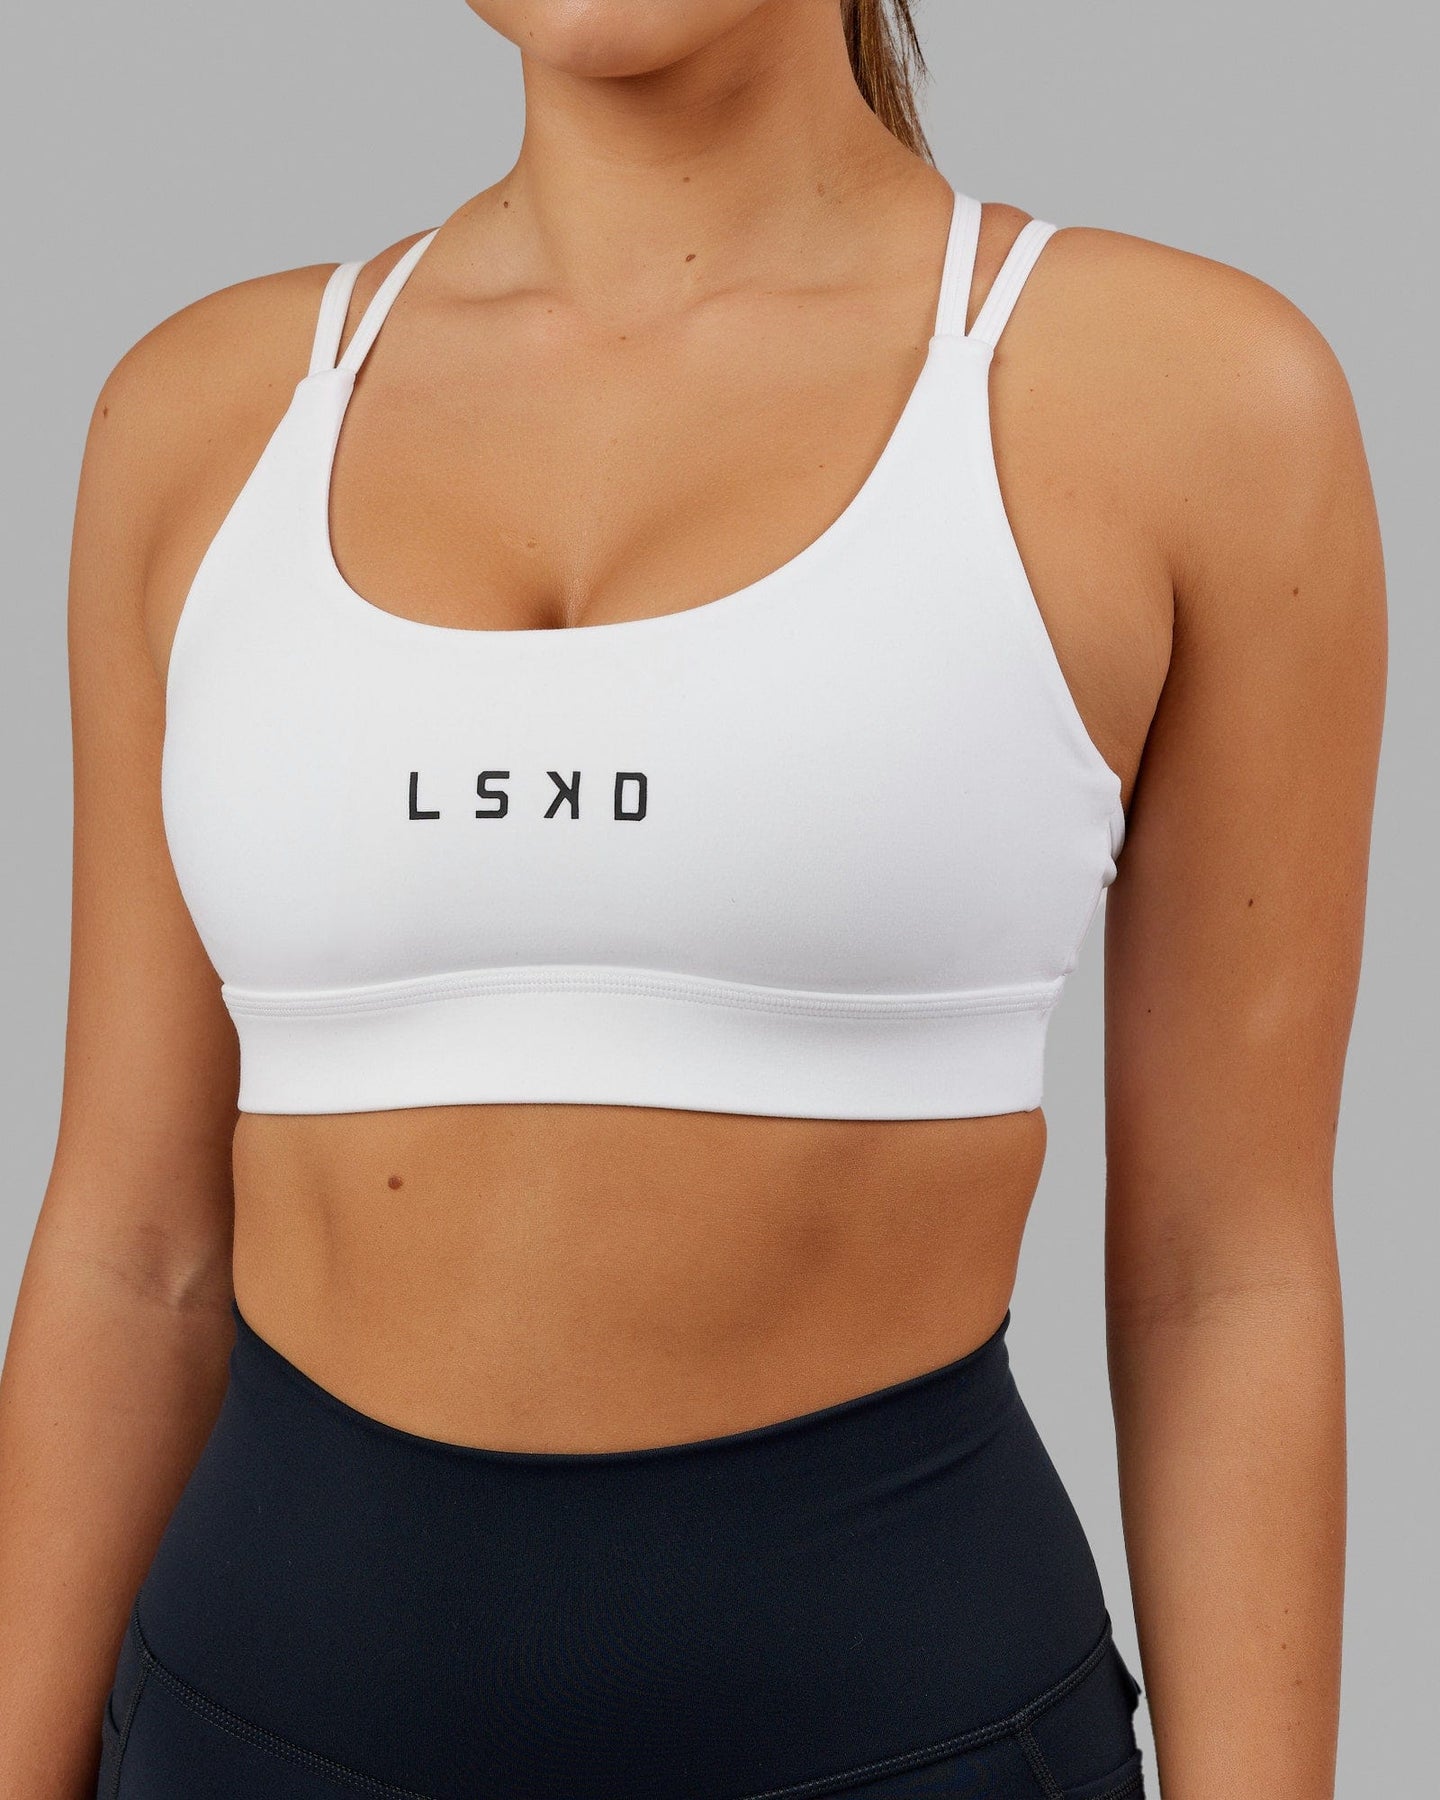 LSKD Sportswear Bras, Lingerie & Intimates, Gumtree Australia Logan Area  - Crestmead